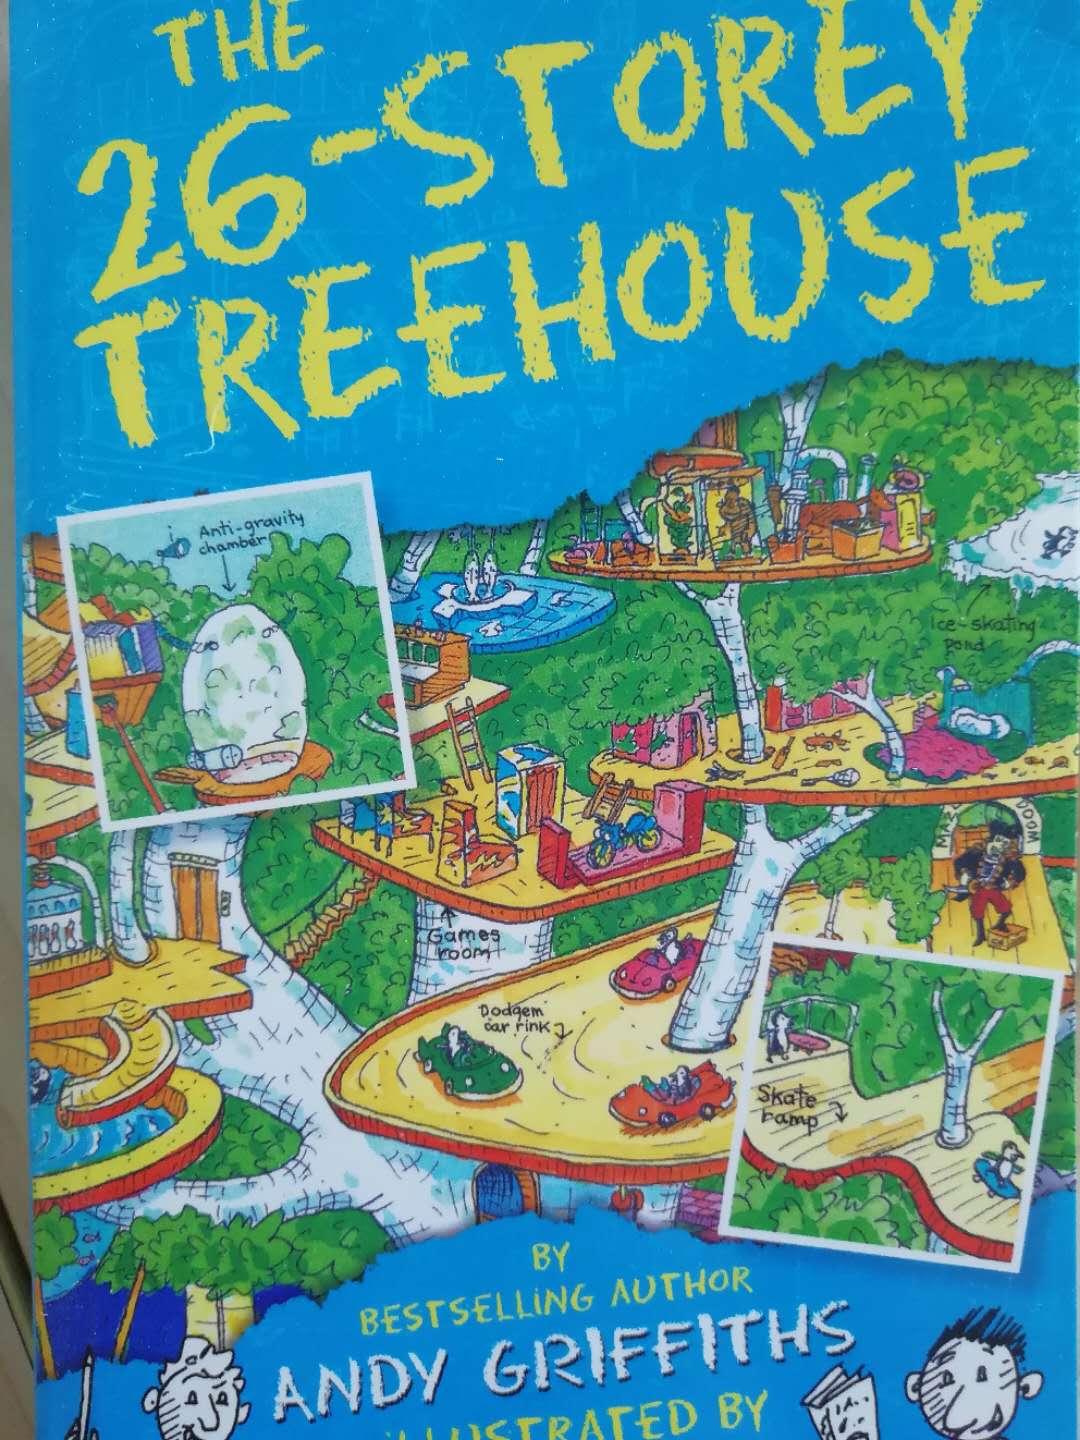 The 13-Storey treehouse